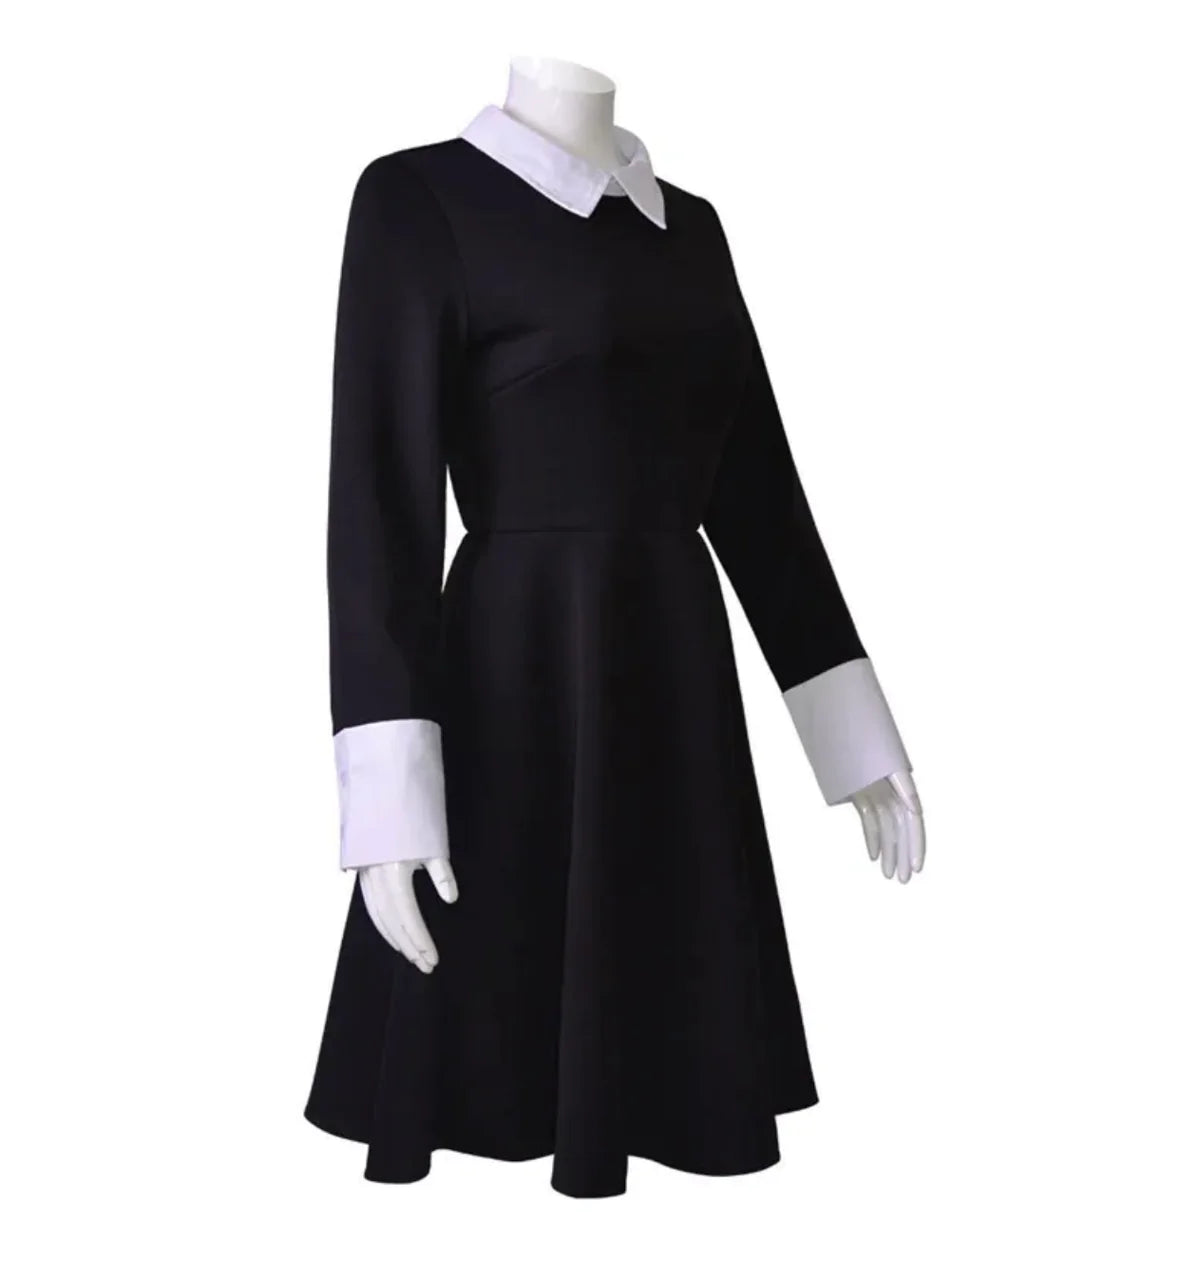 Wednesday Addams - School Uniform (Adult Size)